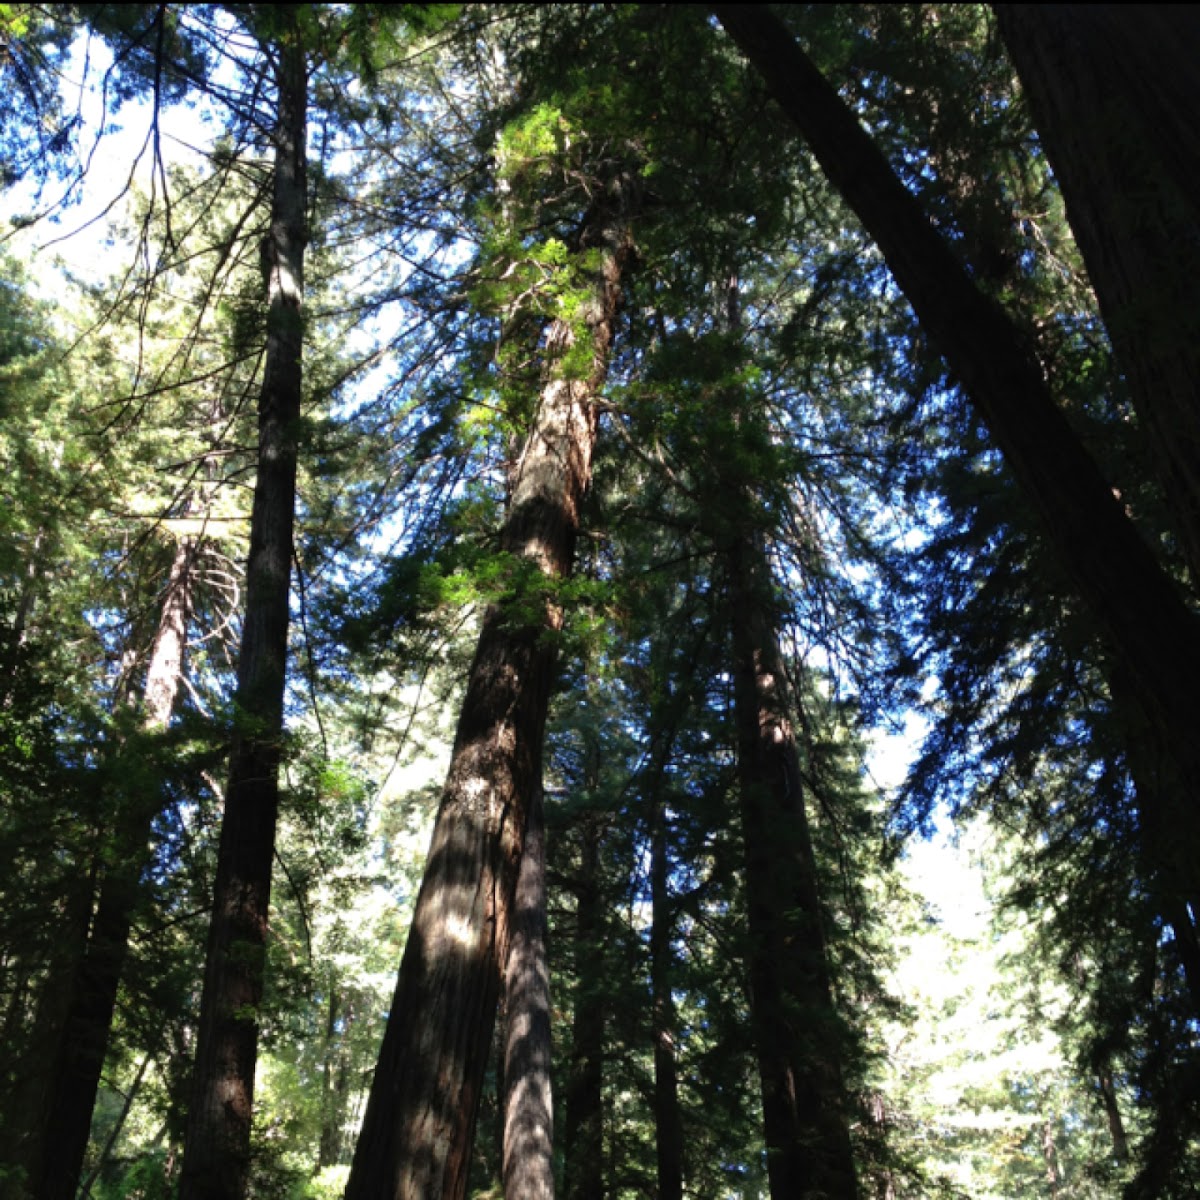 Coastal redwood